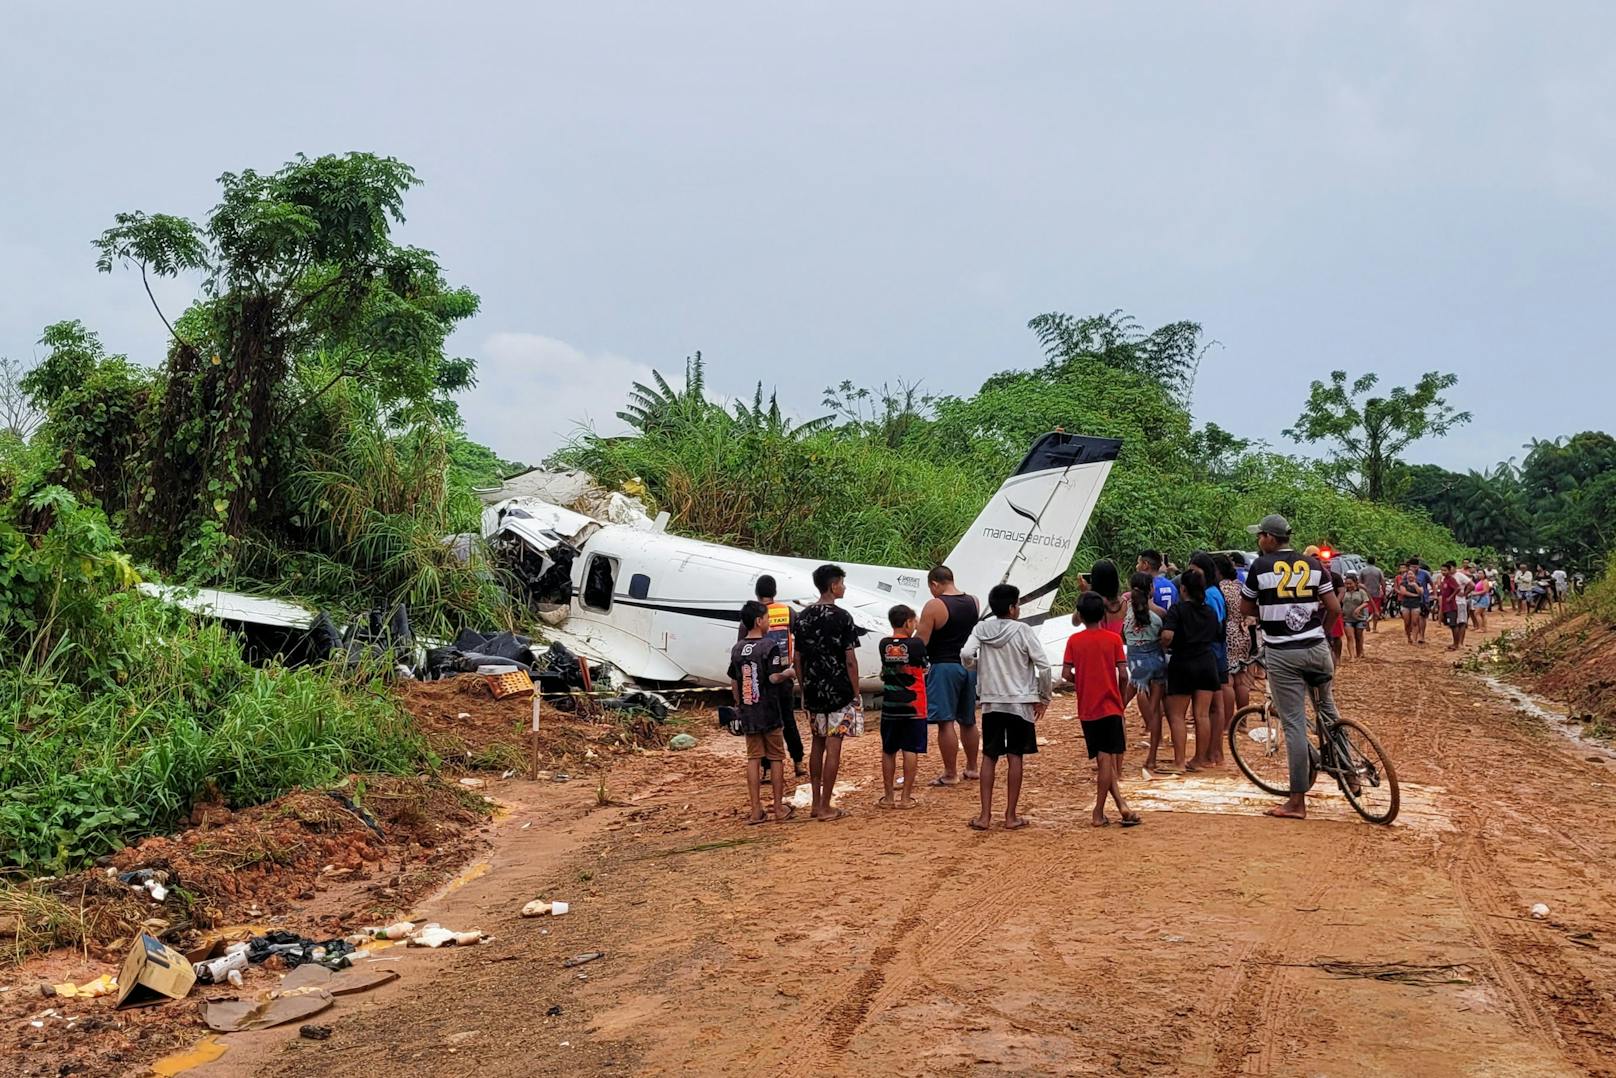 Alle Insassen tot! Fataler Flugzeugabsturz am Amazonas